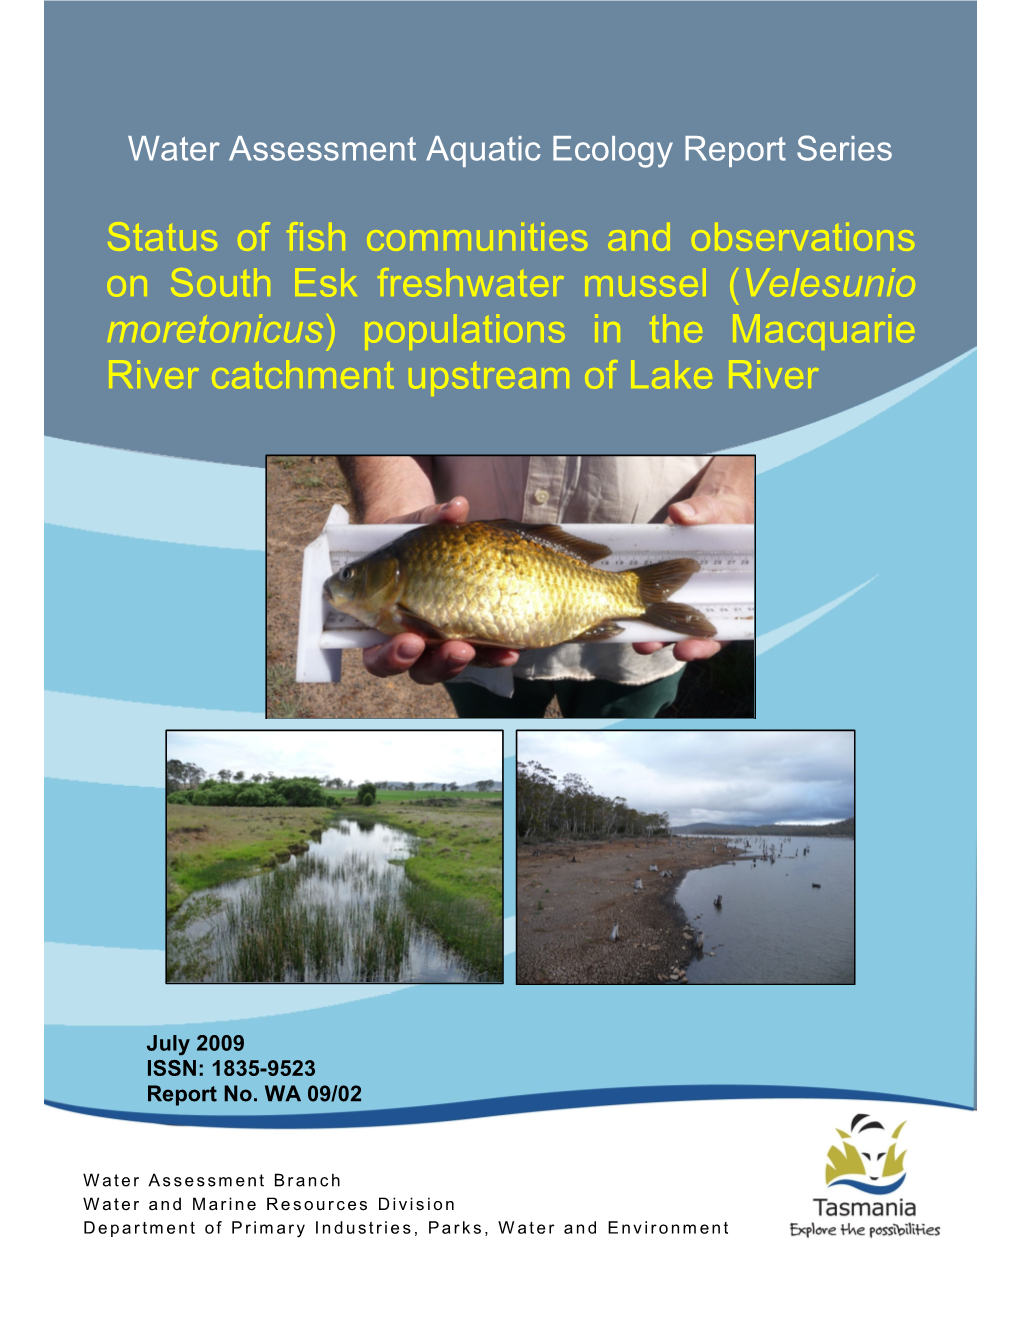 (Velesunio Moretonicus) Populations in the Macquarie River Catchment